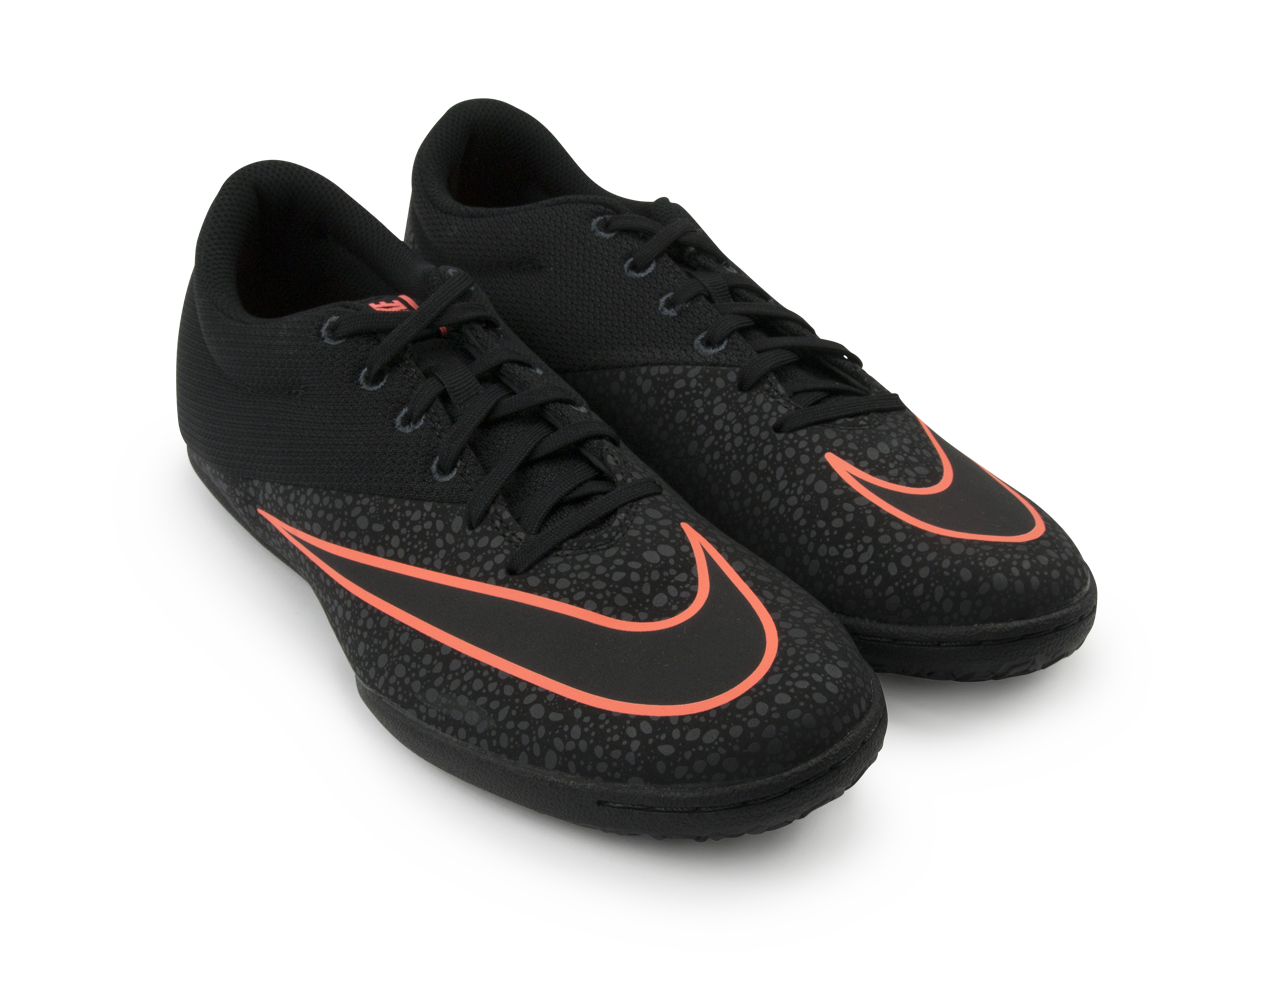 Nike Men's MercurialX Pro Indoor Soccer Shoes Black/Black/Anthracite